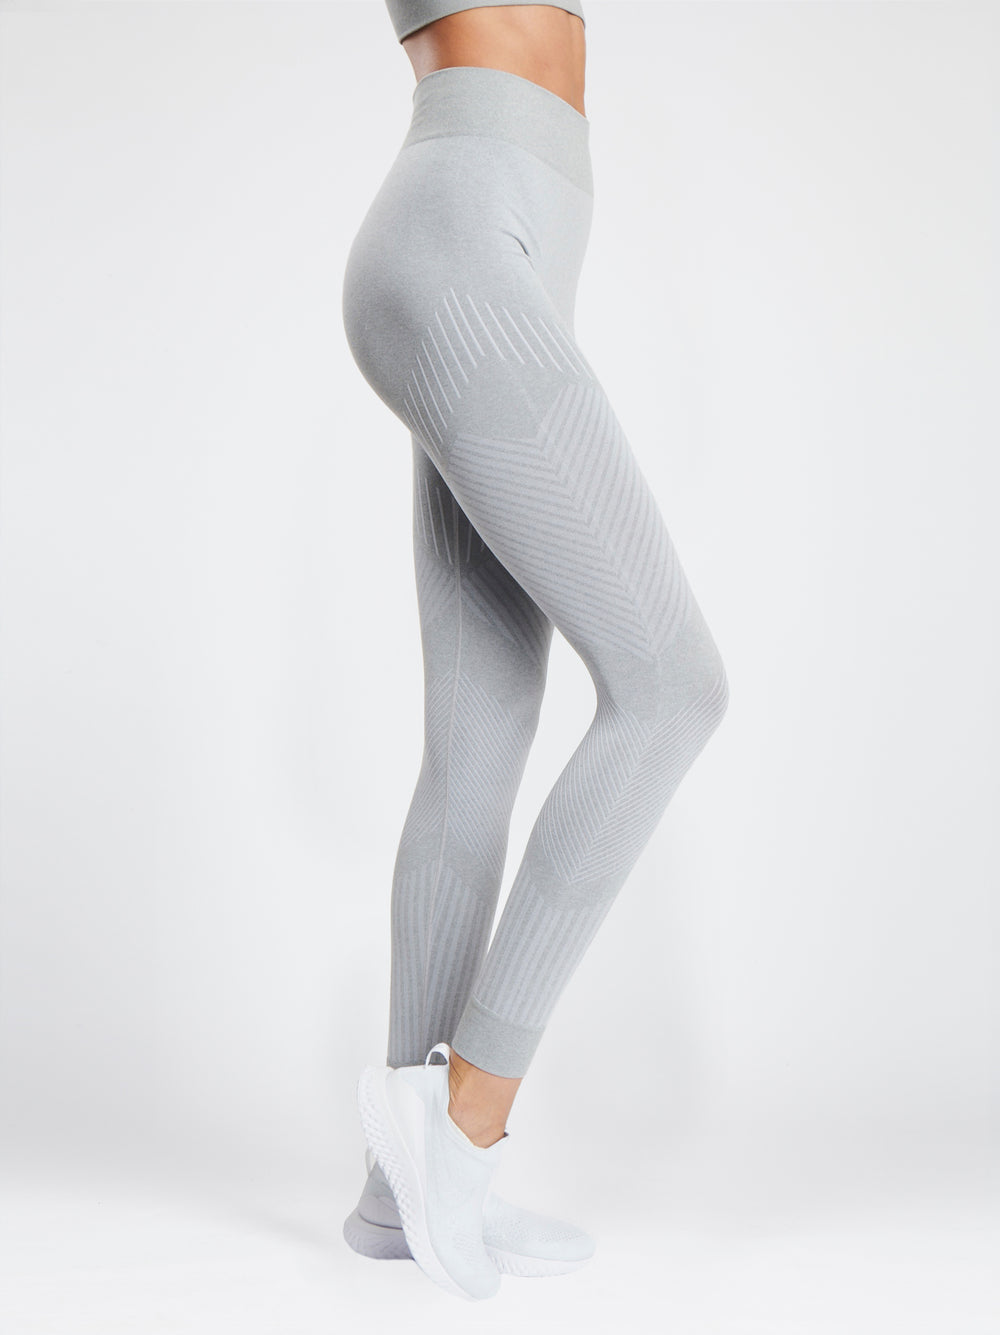 high waist flow leggings in cool gray